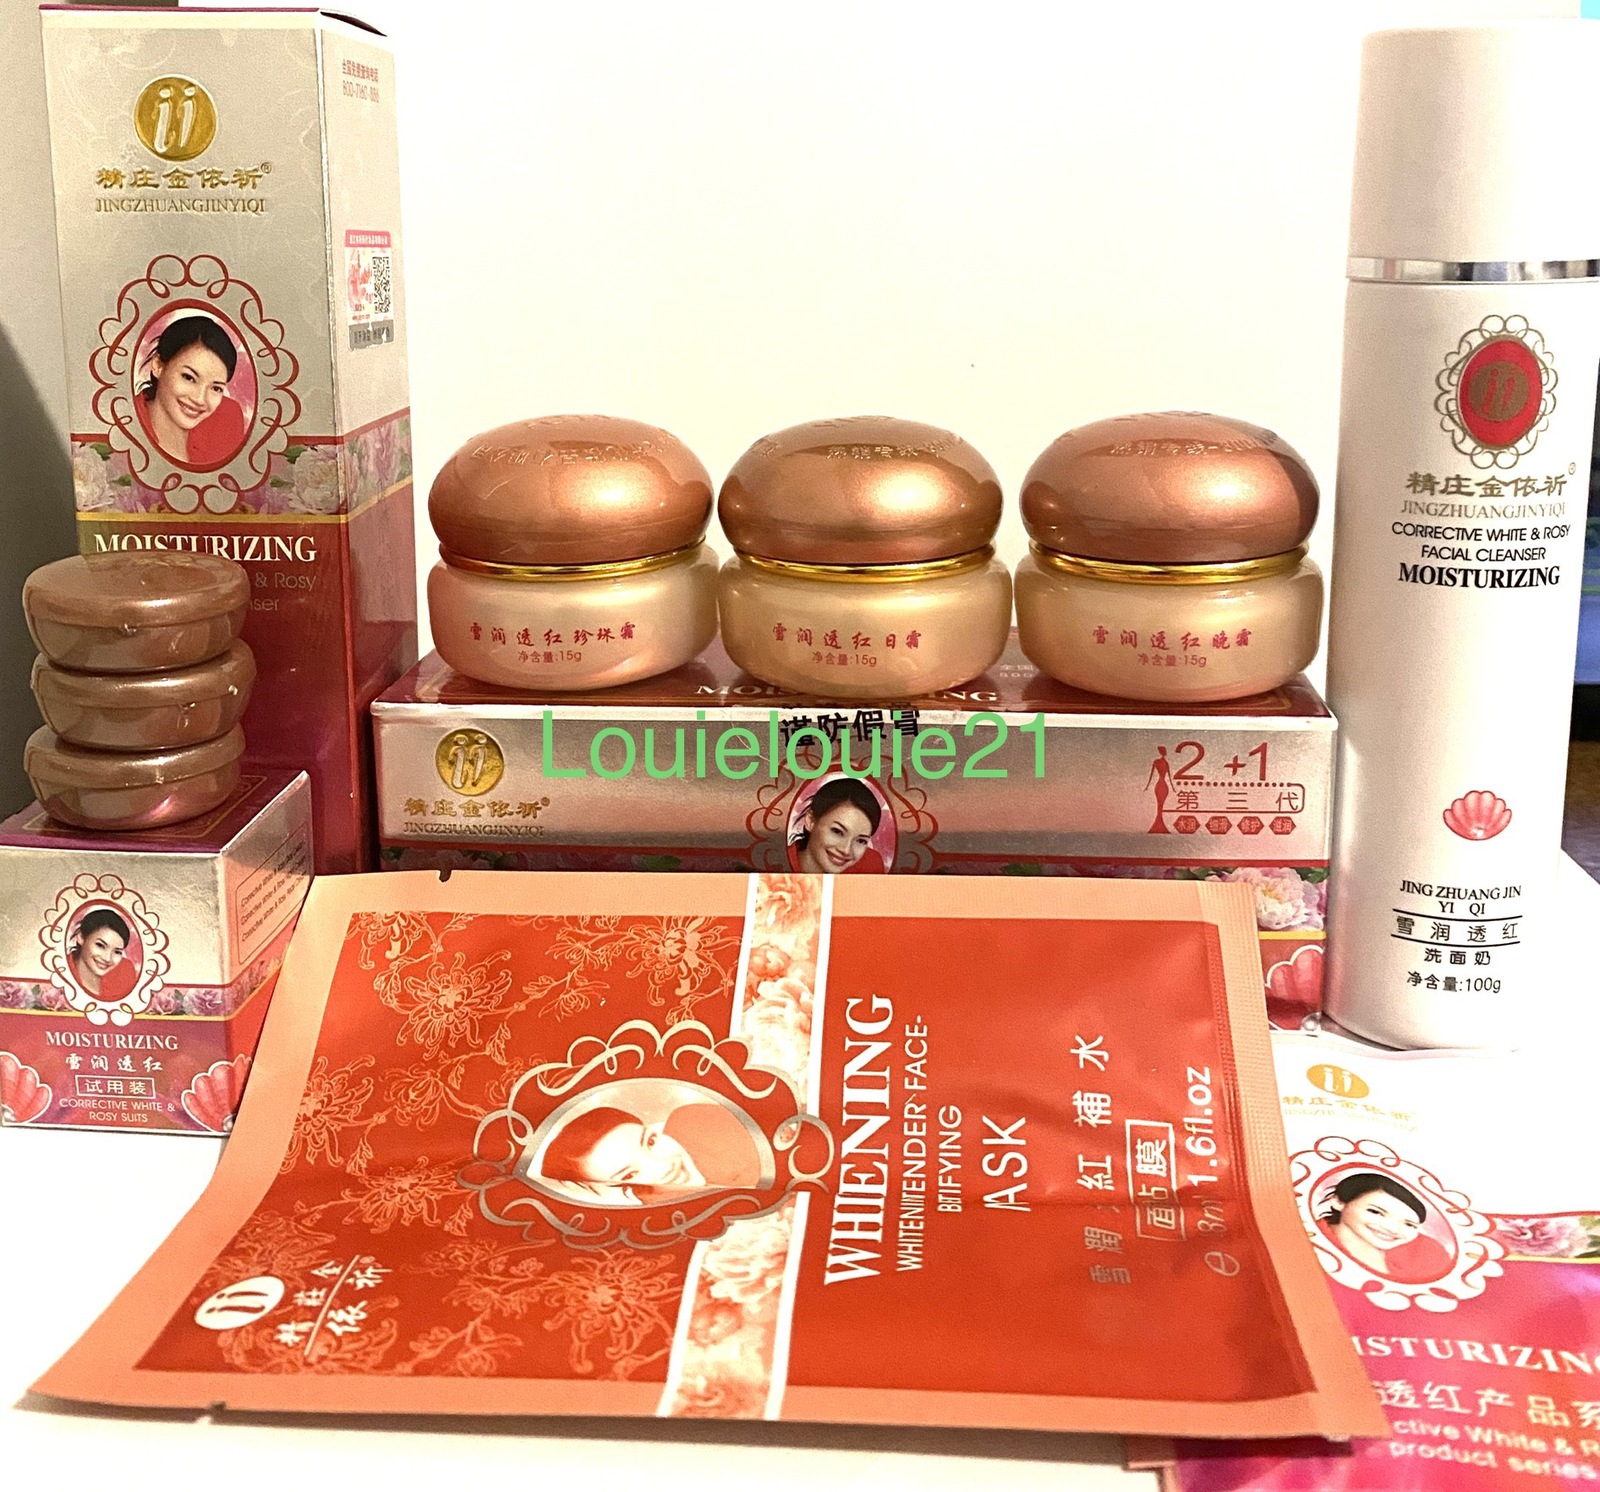 Original YiQi beauty whitening cream 2+1 effective in 7day (10 sets). - $350.00